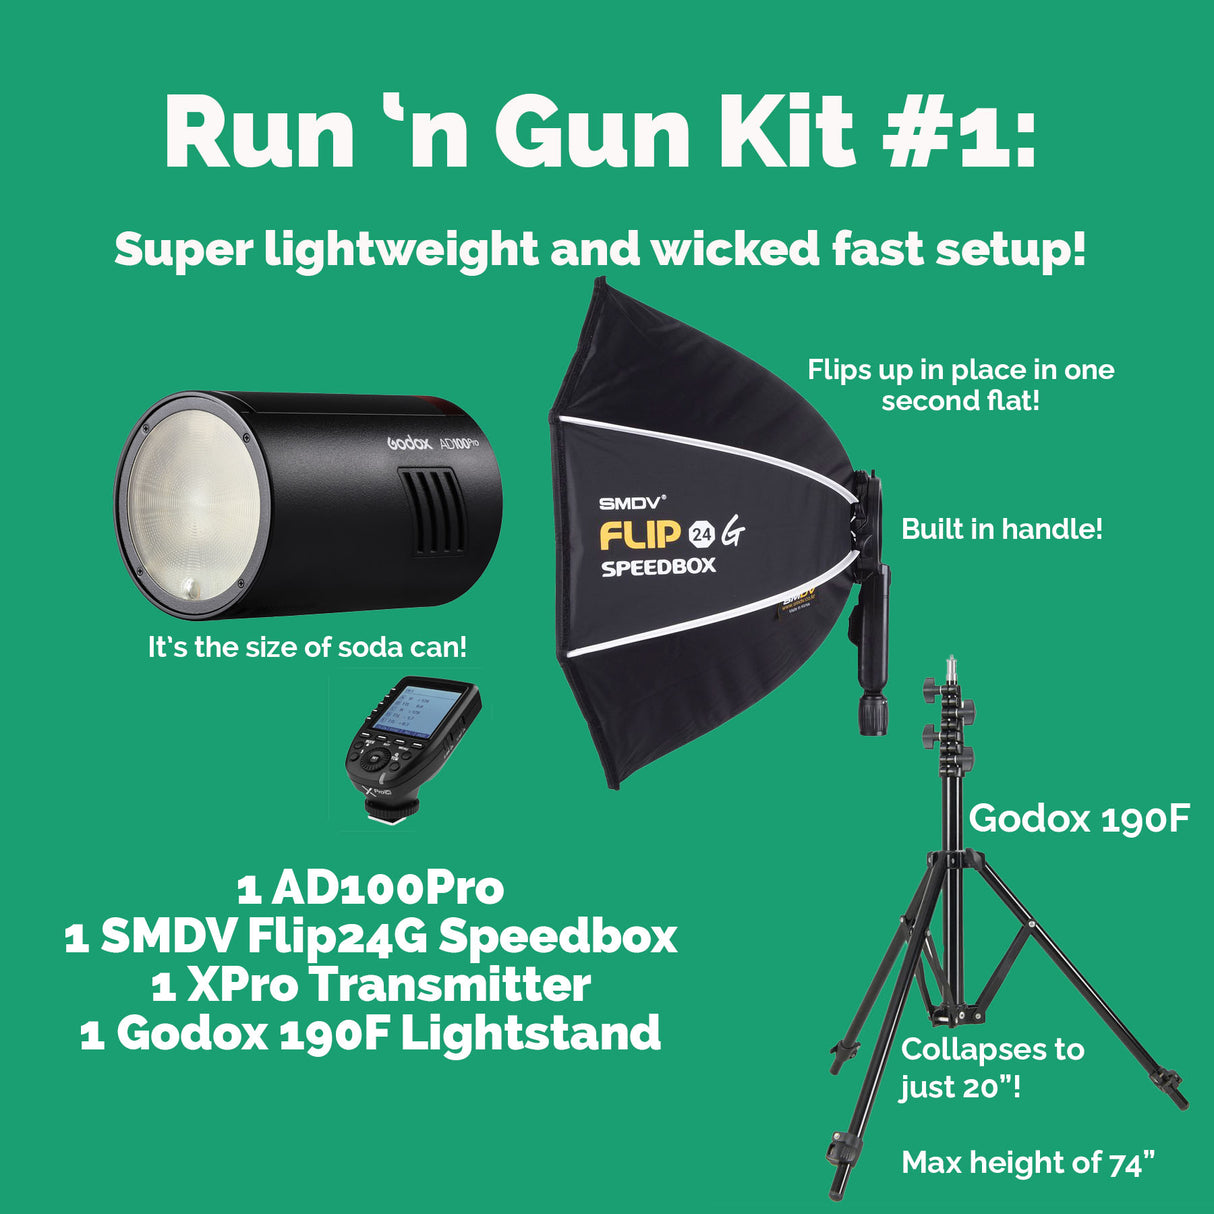 Run 'n Gun Kit #1 with AD100Pro